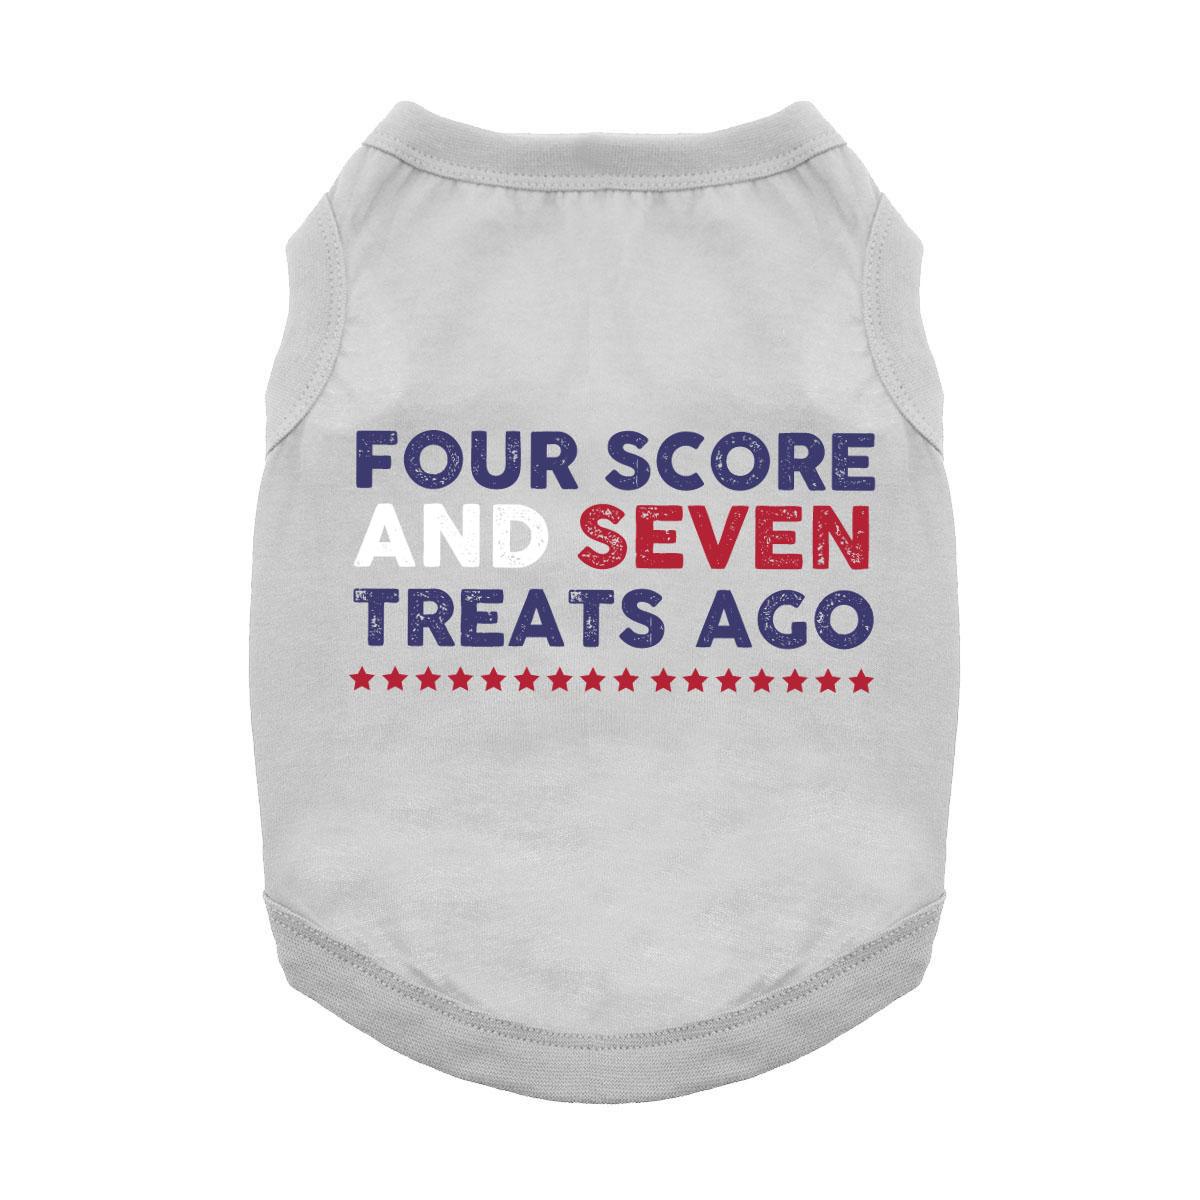 Four Score and Seven Treats Ago Dog Shirt - Gray